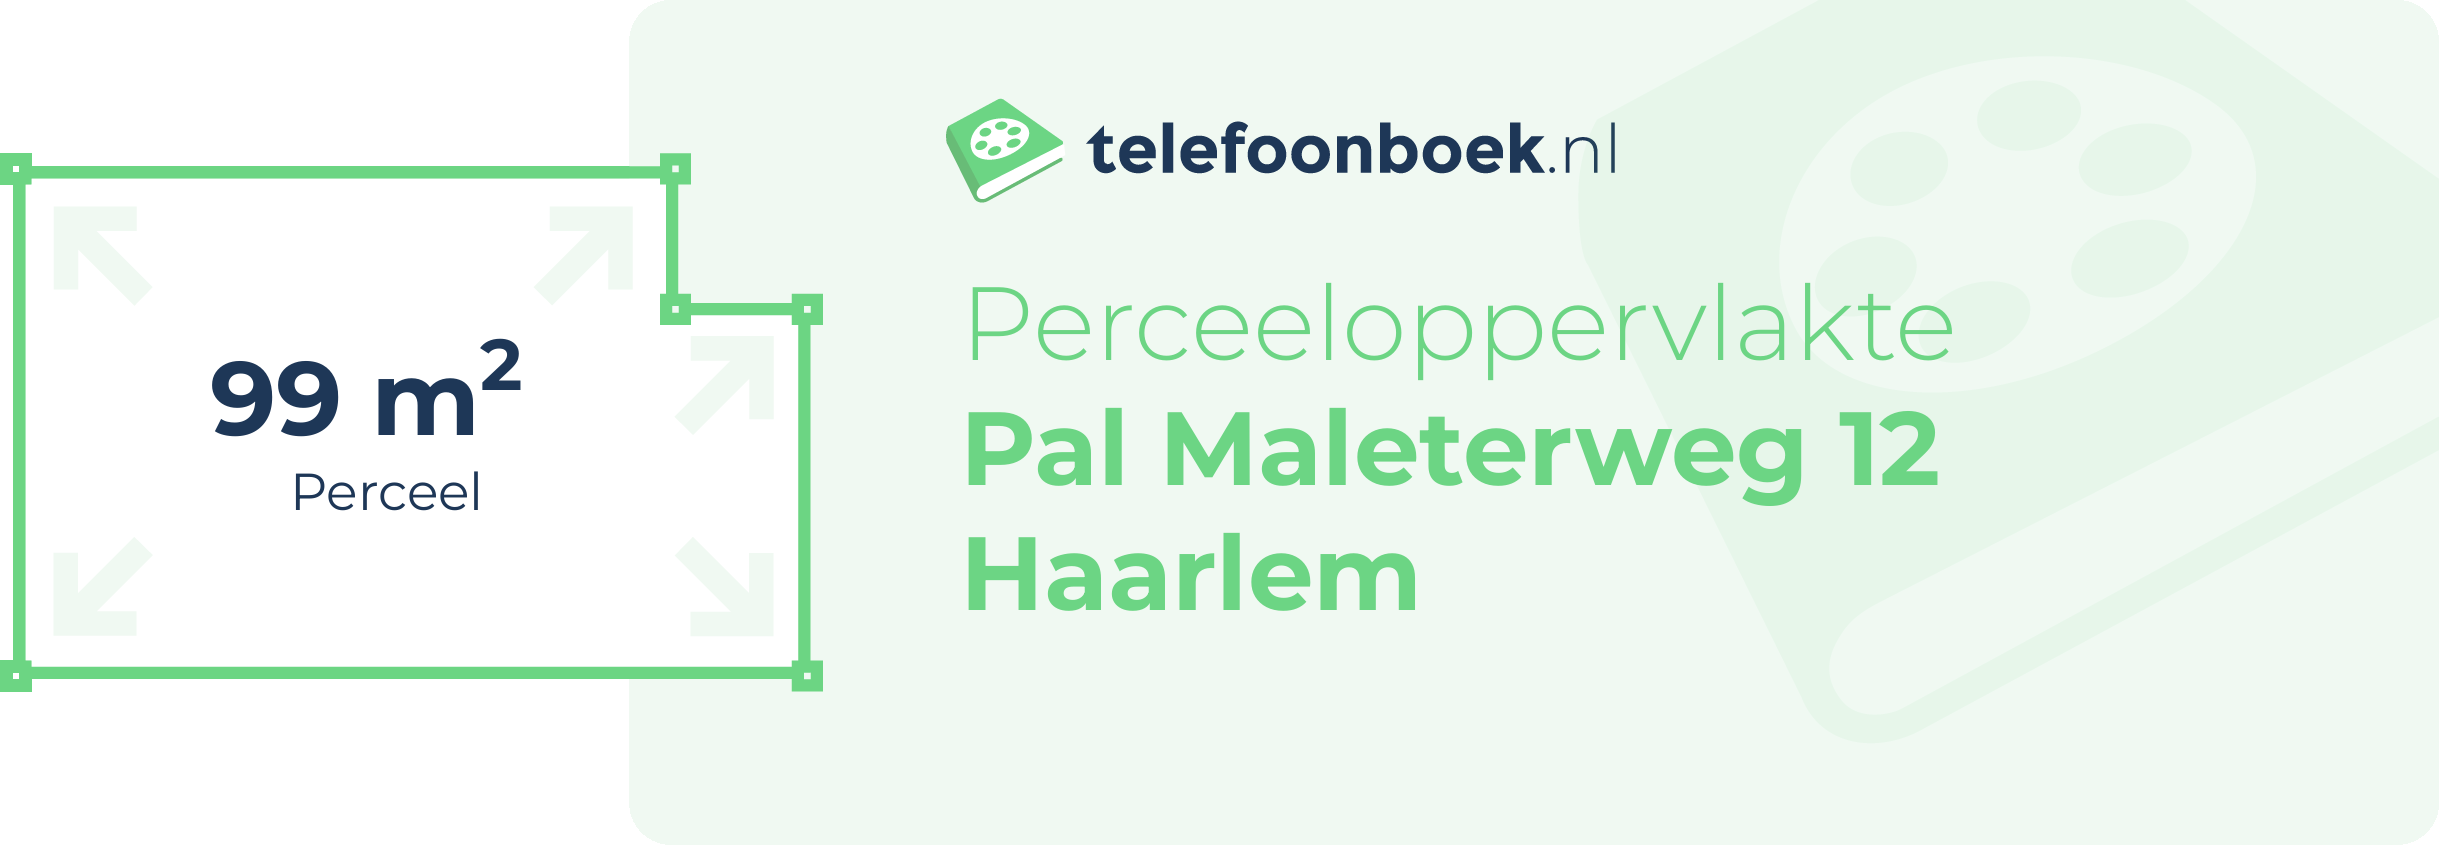 Perceeloppervlakte Pal Maleterweg 12 Haarlem